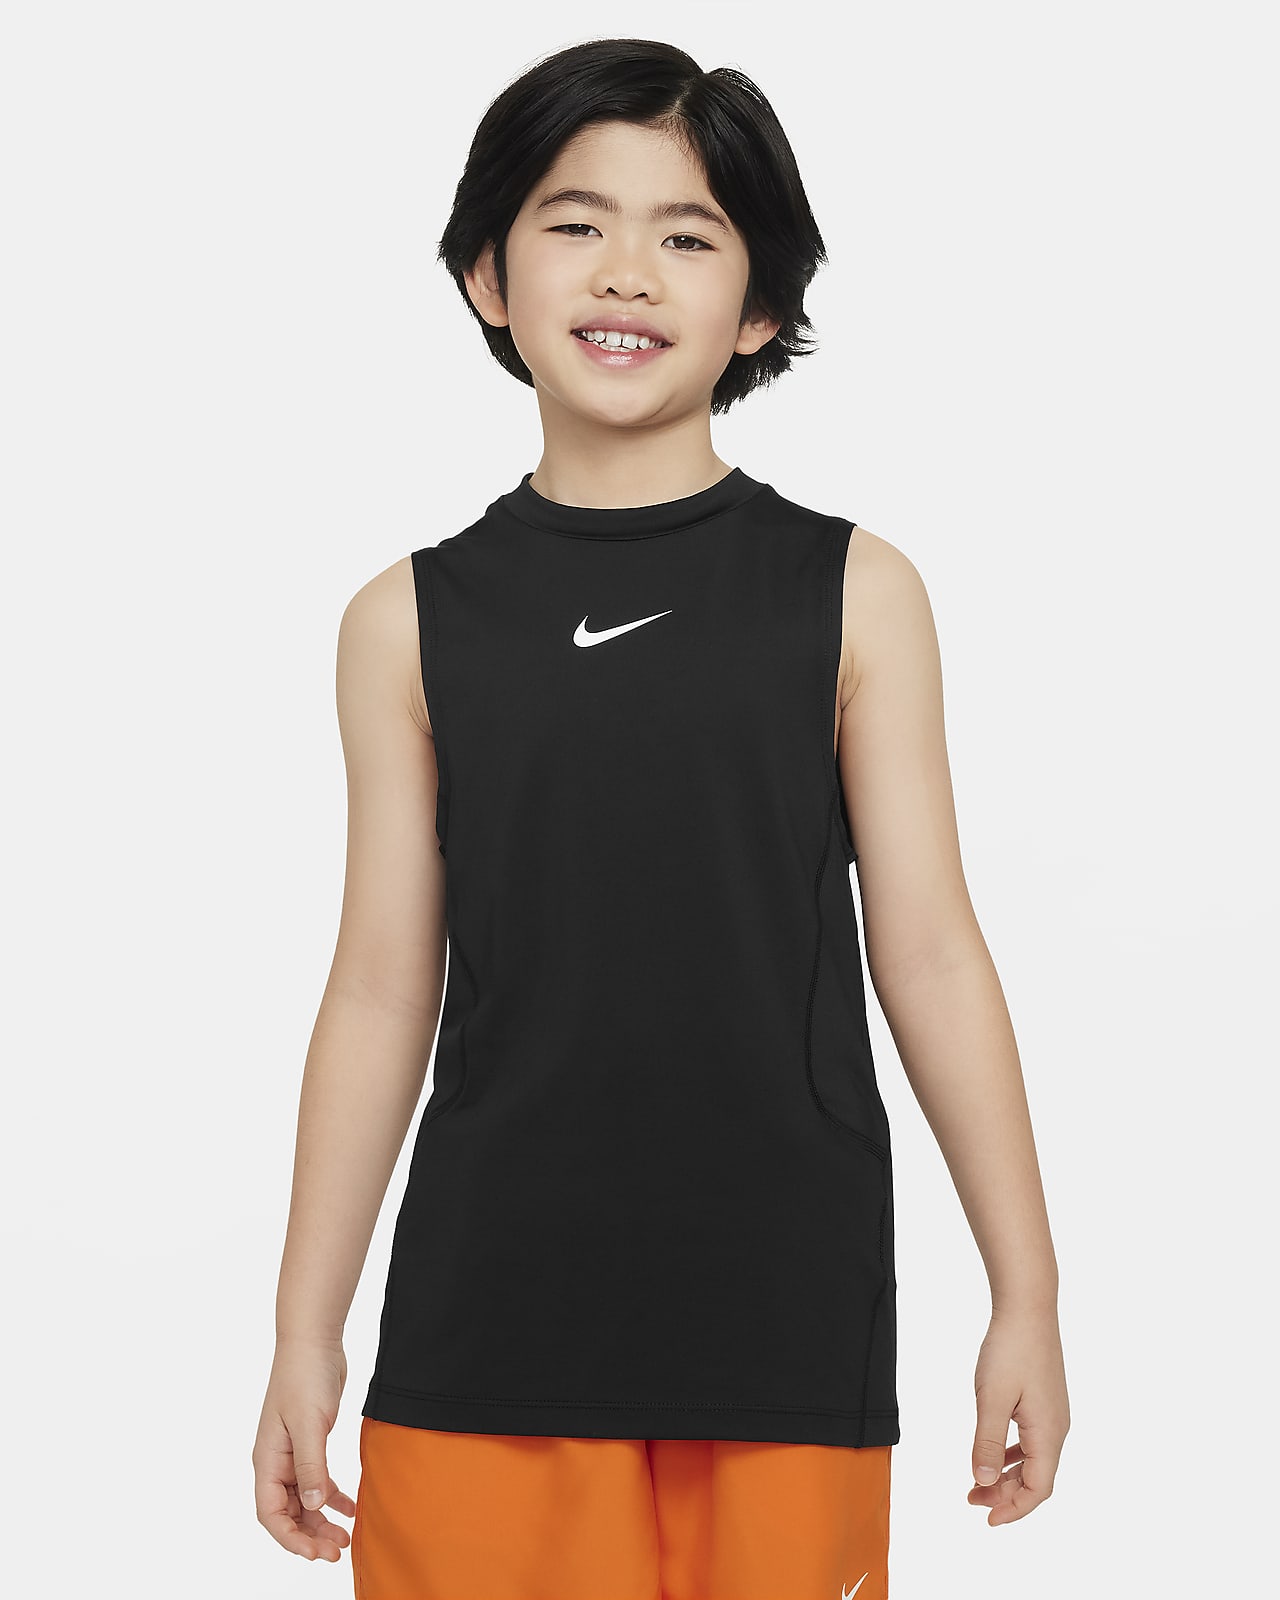 Camisola sem mangas Nike Pro Júnior (Rapaz)